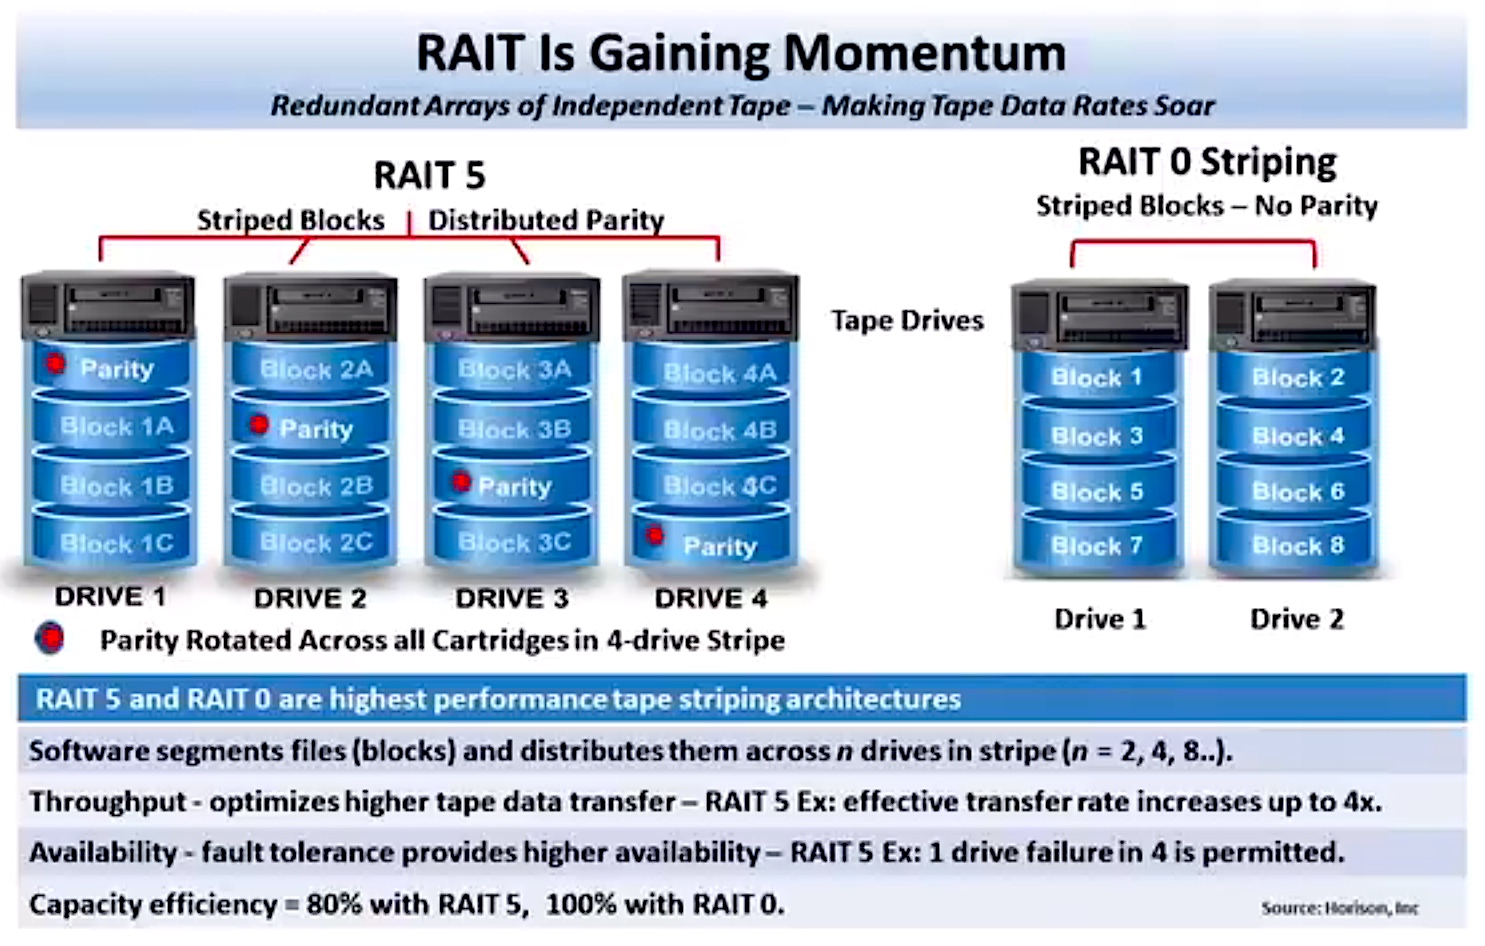 RAIT – Rapid Transit for Mass Storage